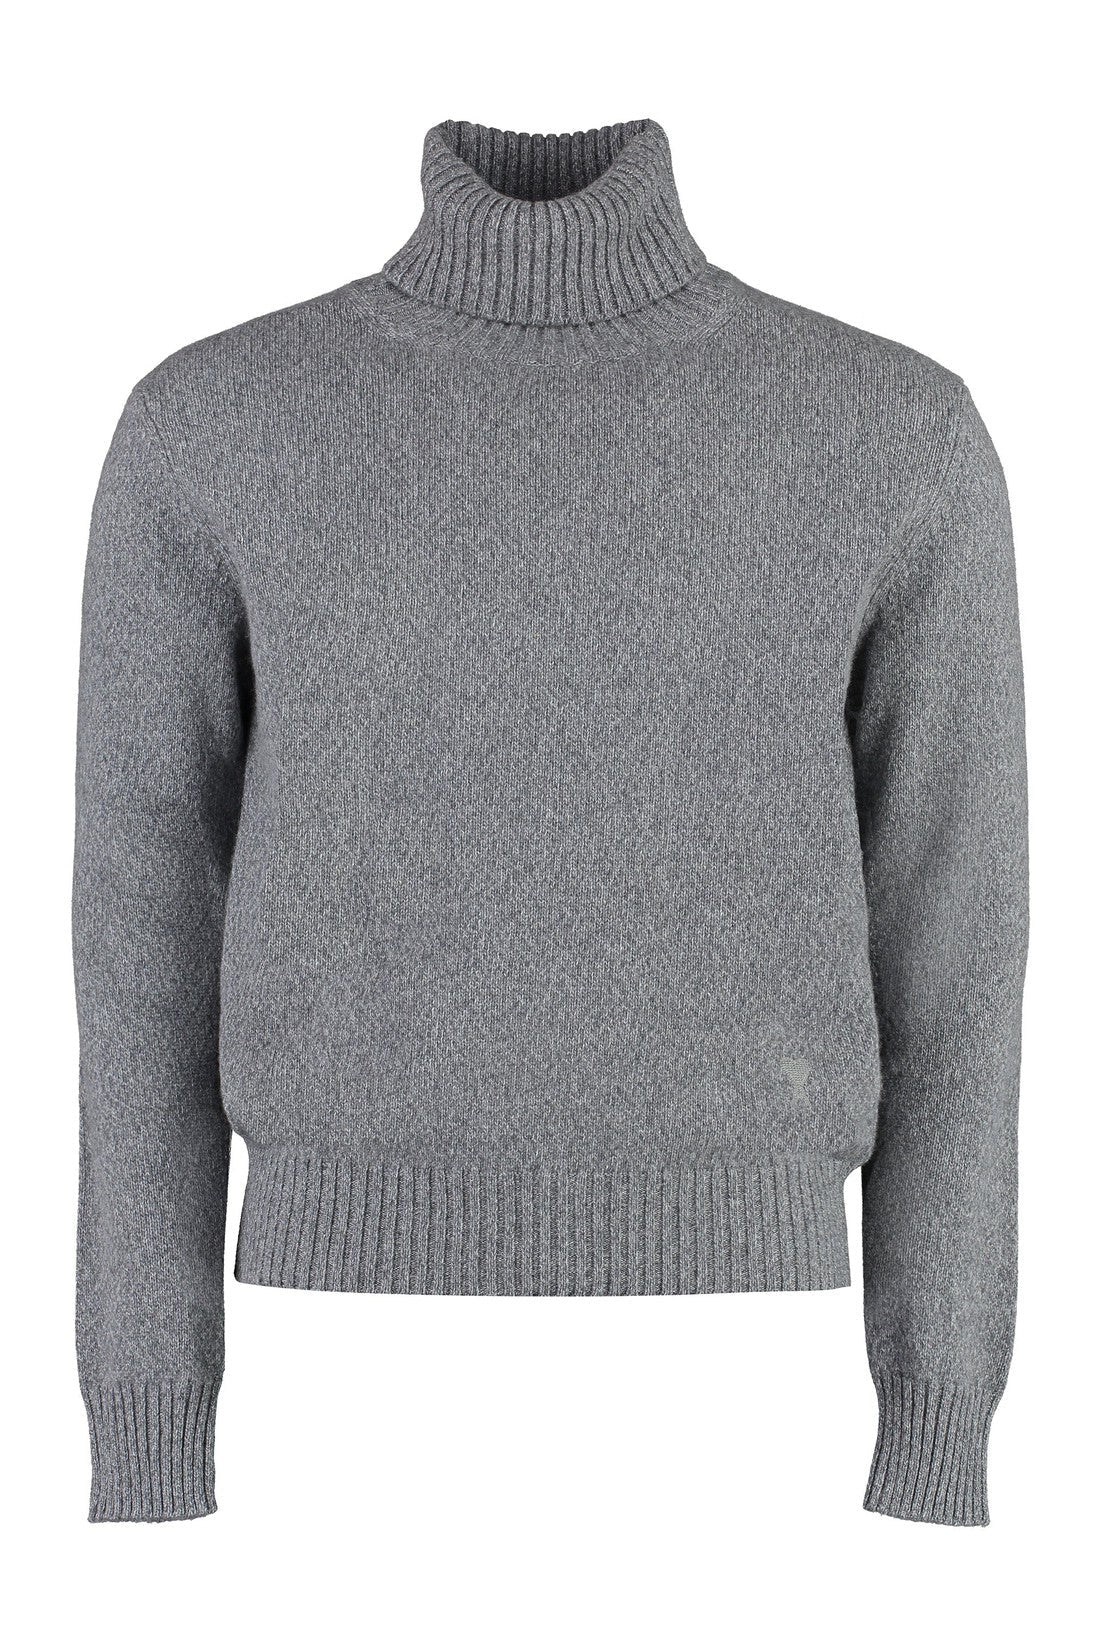 AMI PARIS-OUTLET-SALE-Wool and cashmere sweater-ARCHIVIST